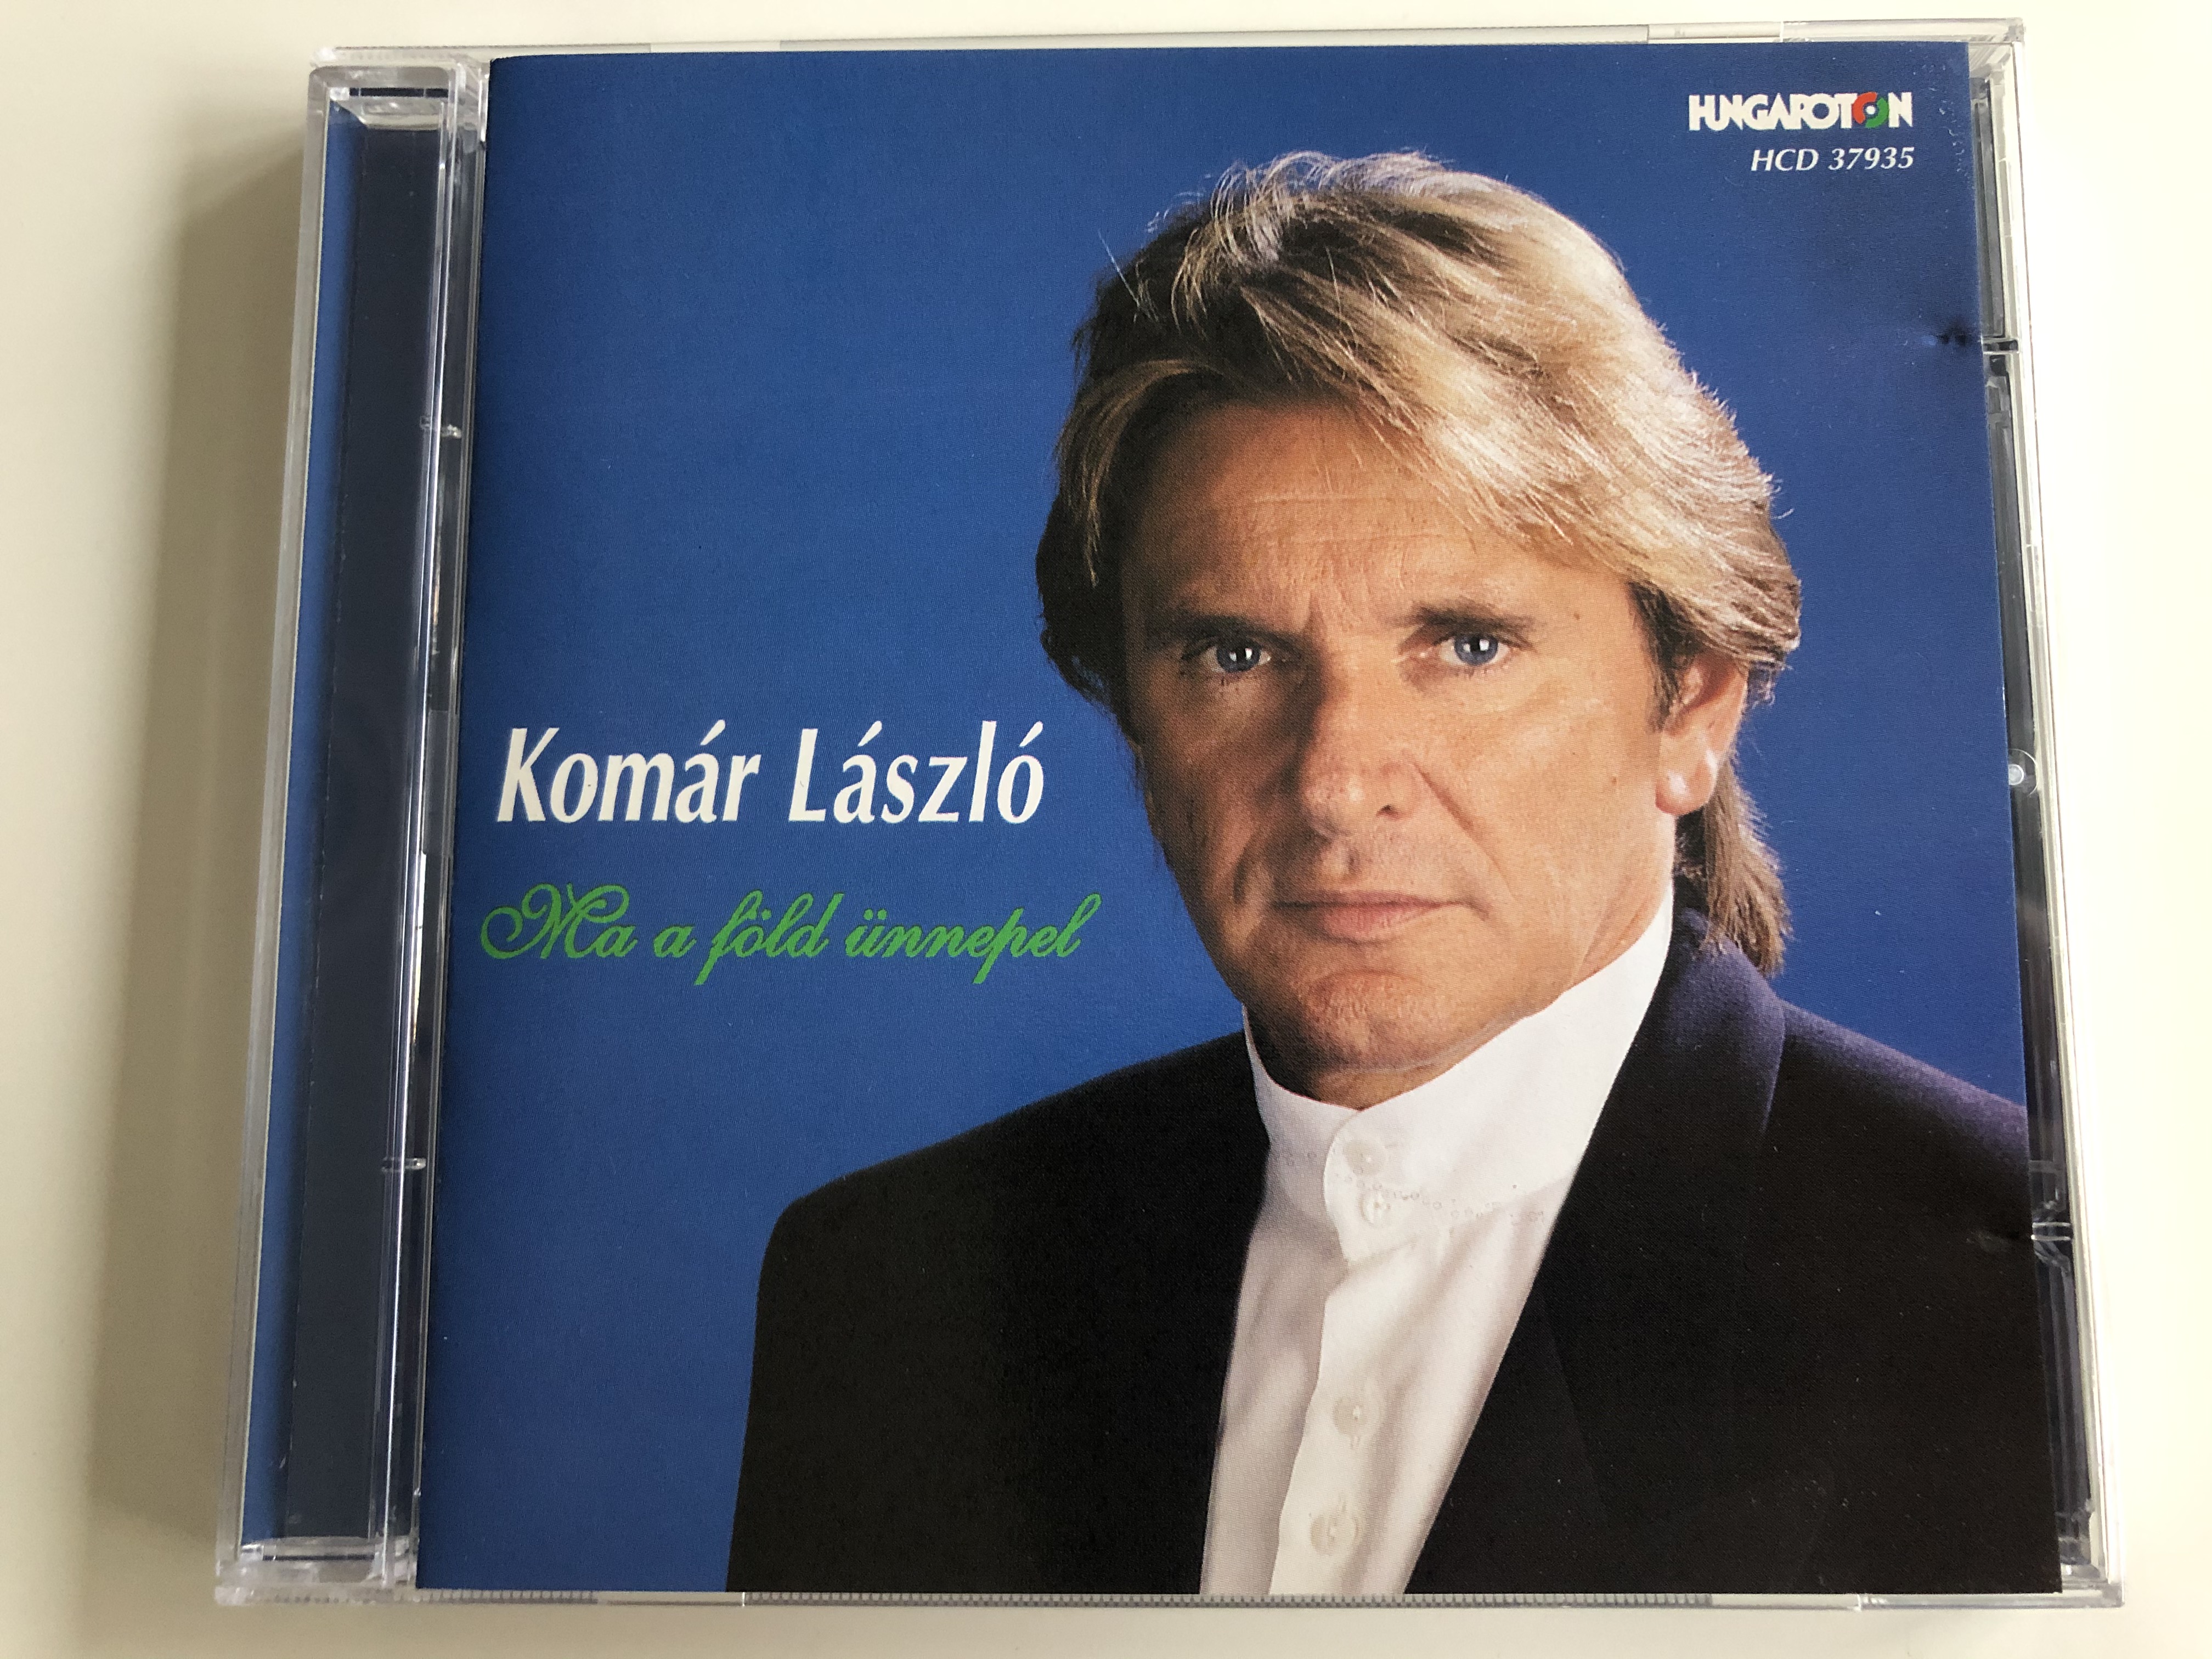 kom-r-l-szl-ma-a-f-ld-nnepel-hungaroton-audio-cd-1998-hcd-37935-1-.jpg